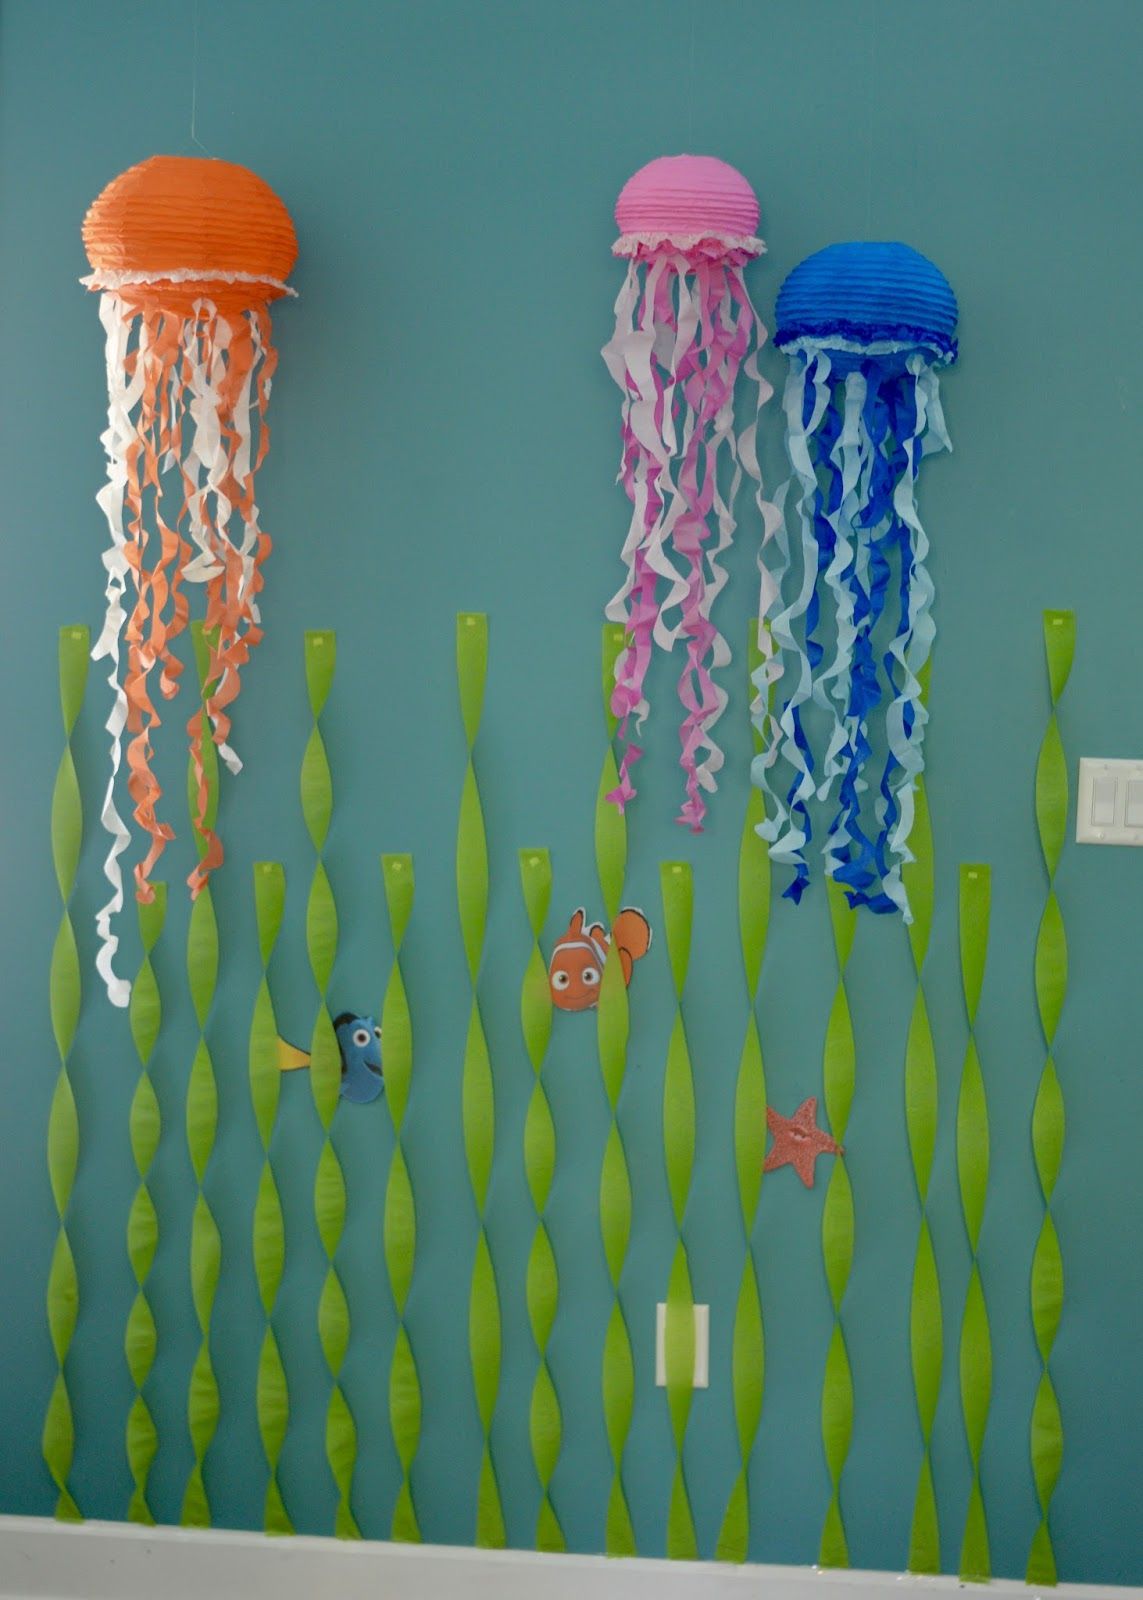 Finding Nemo Birthday Party Ideas: Food, Decor , MoreHD Wallpaper